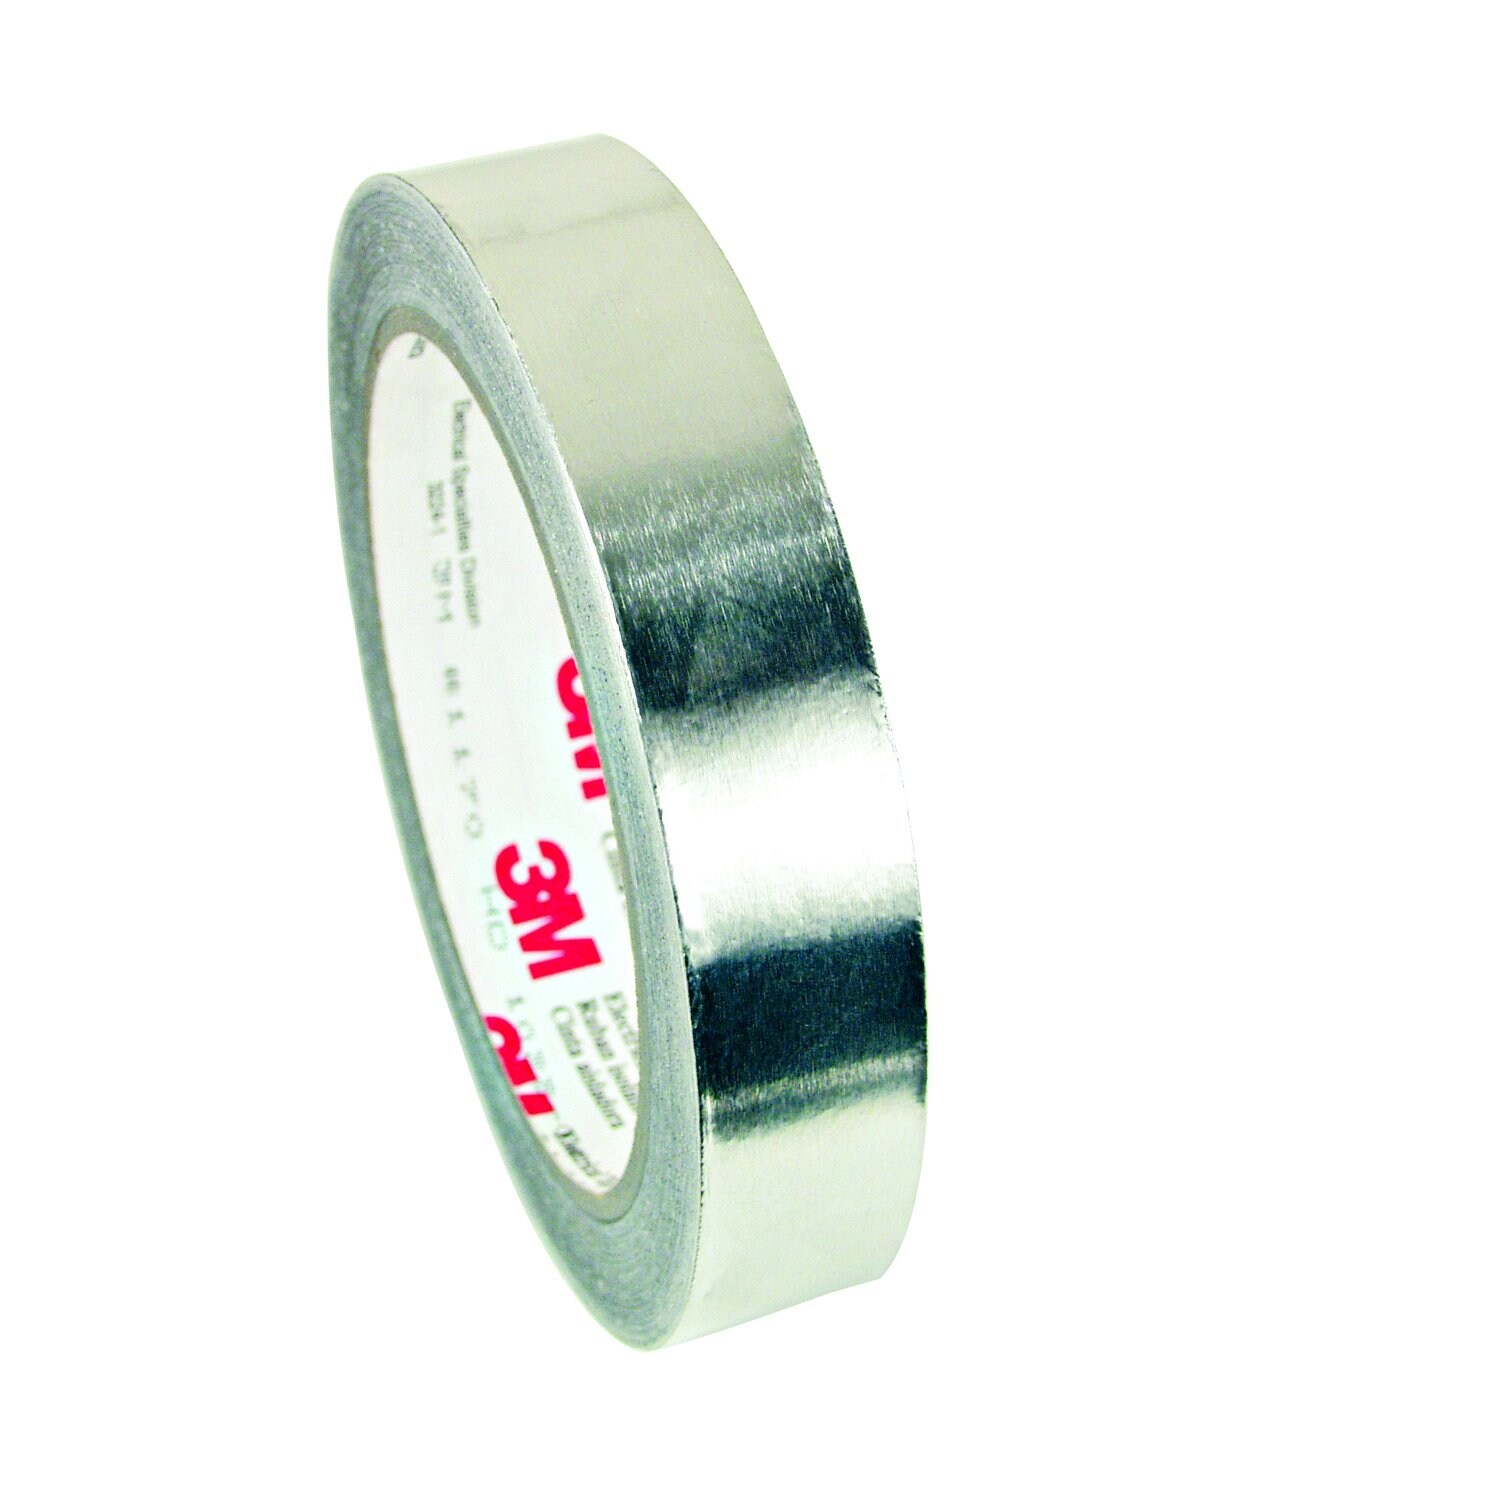 7100043205 - 3M Aluminum Foil Tape 1115B, 1 in x 60 yd, Silver, 9 Rolls/Case